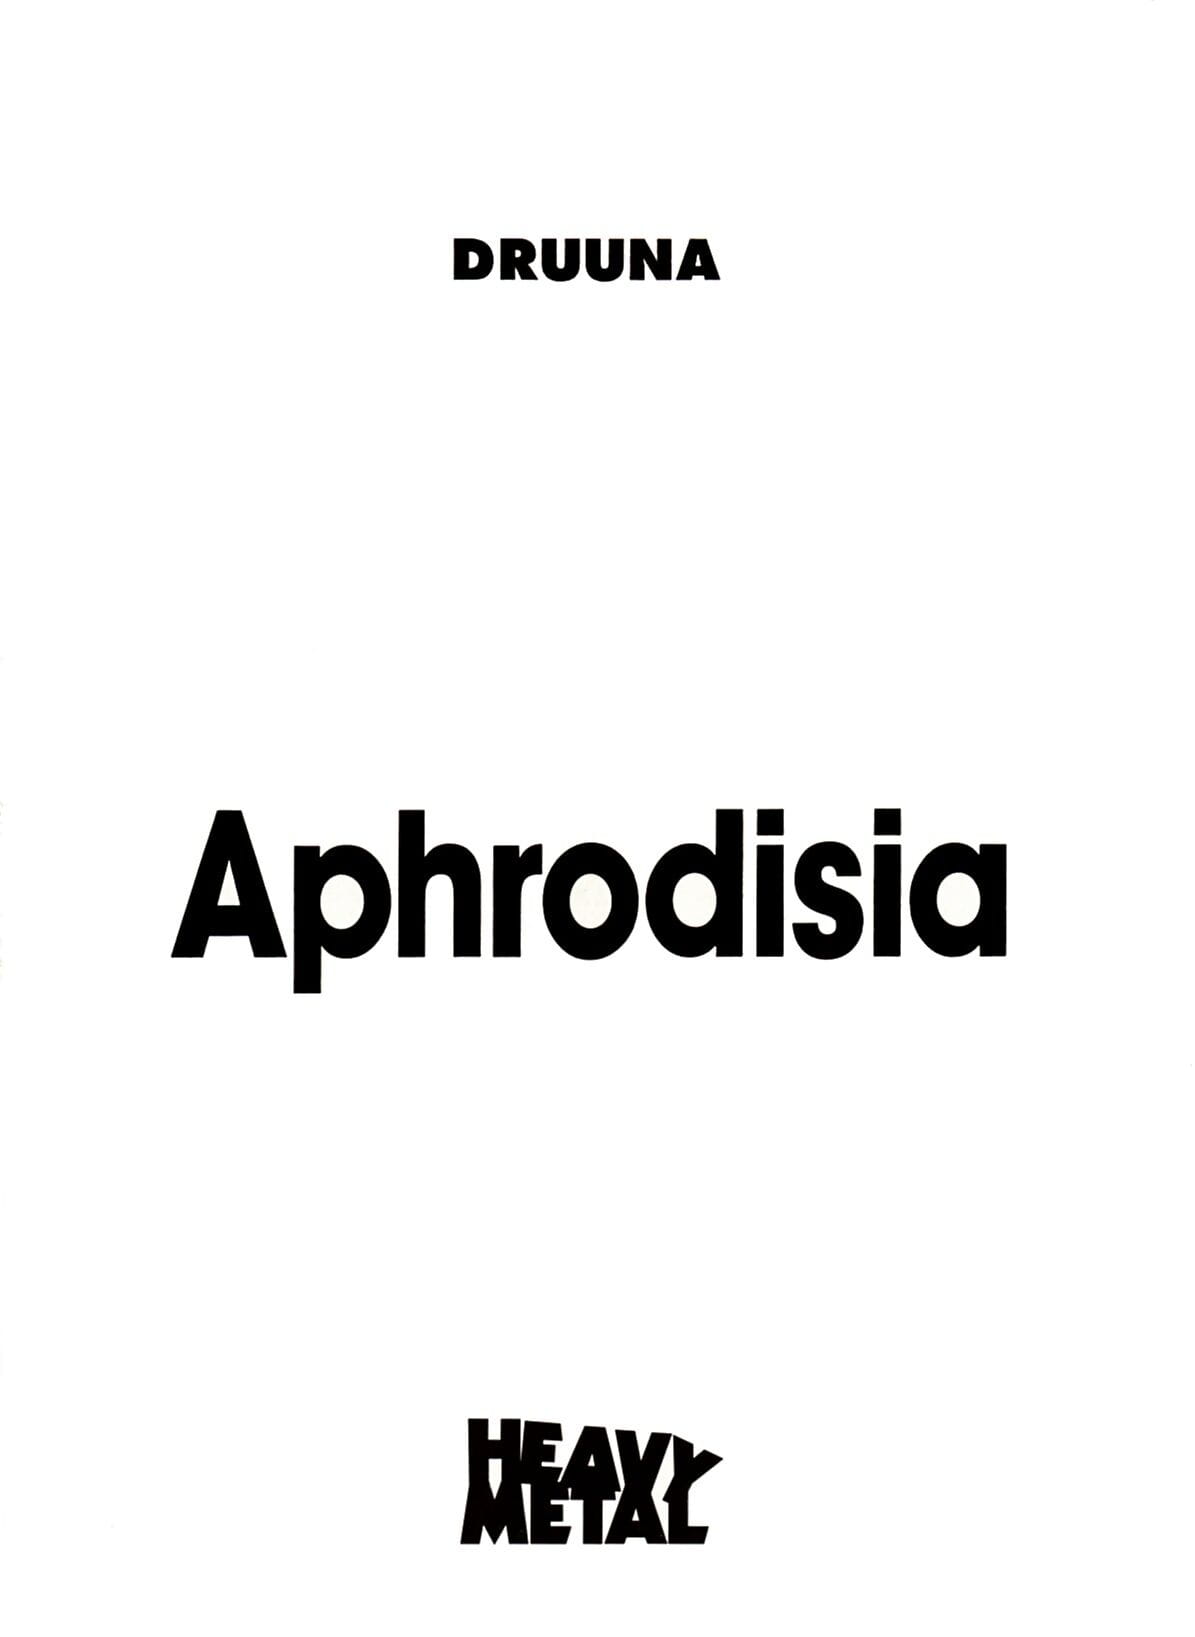 Serpieri- Paolo Eleuteri - Druuna 6 - Aphrodisia page 1